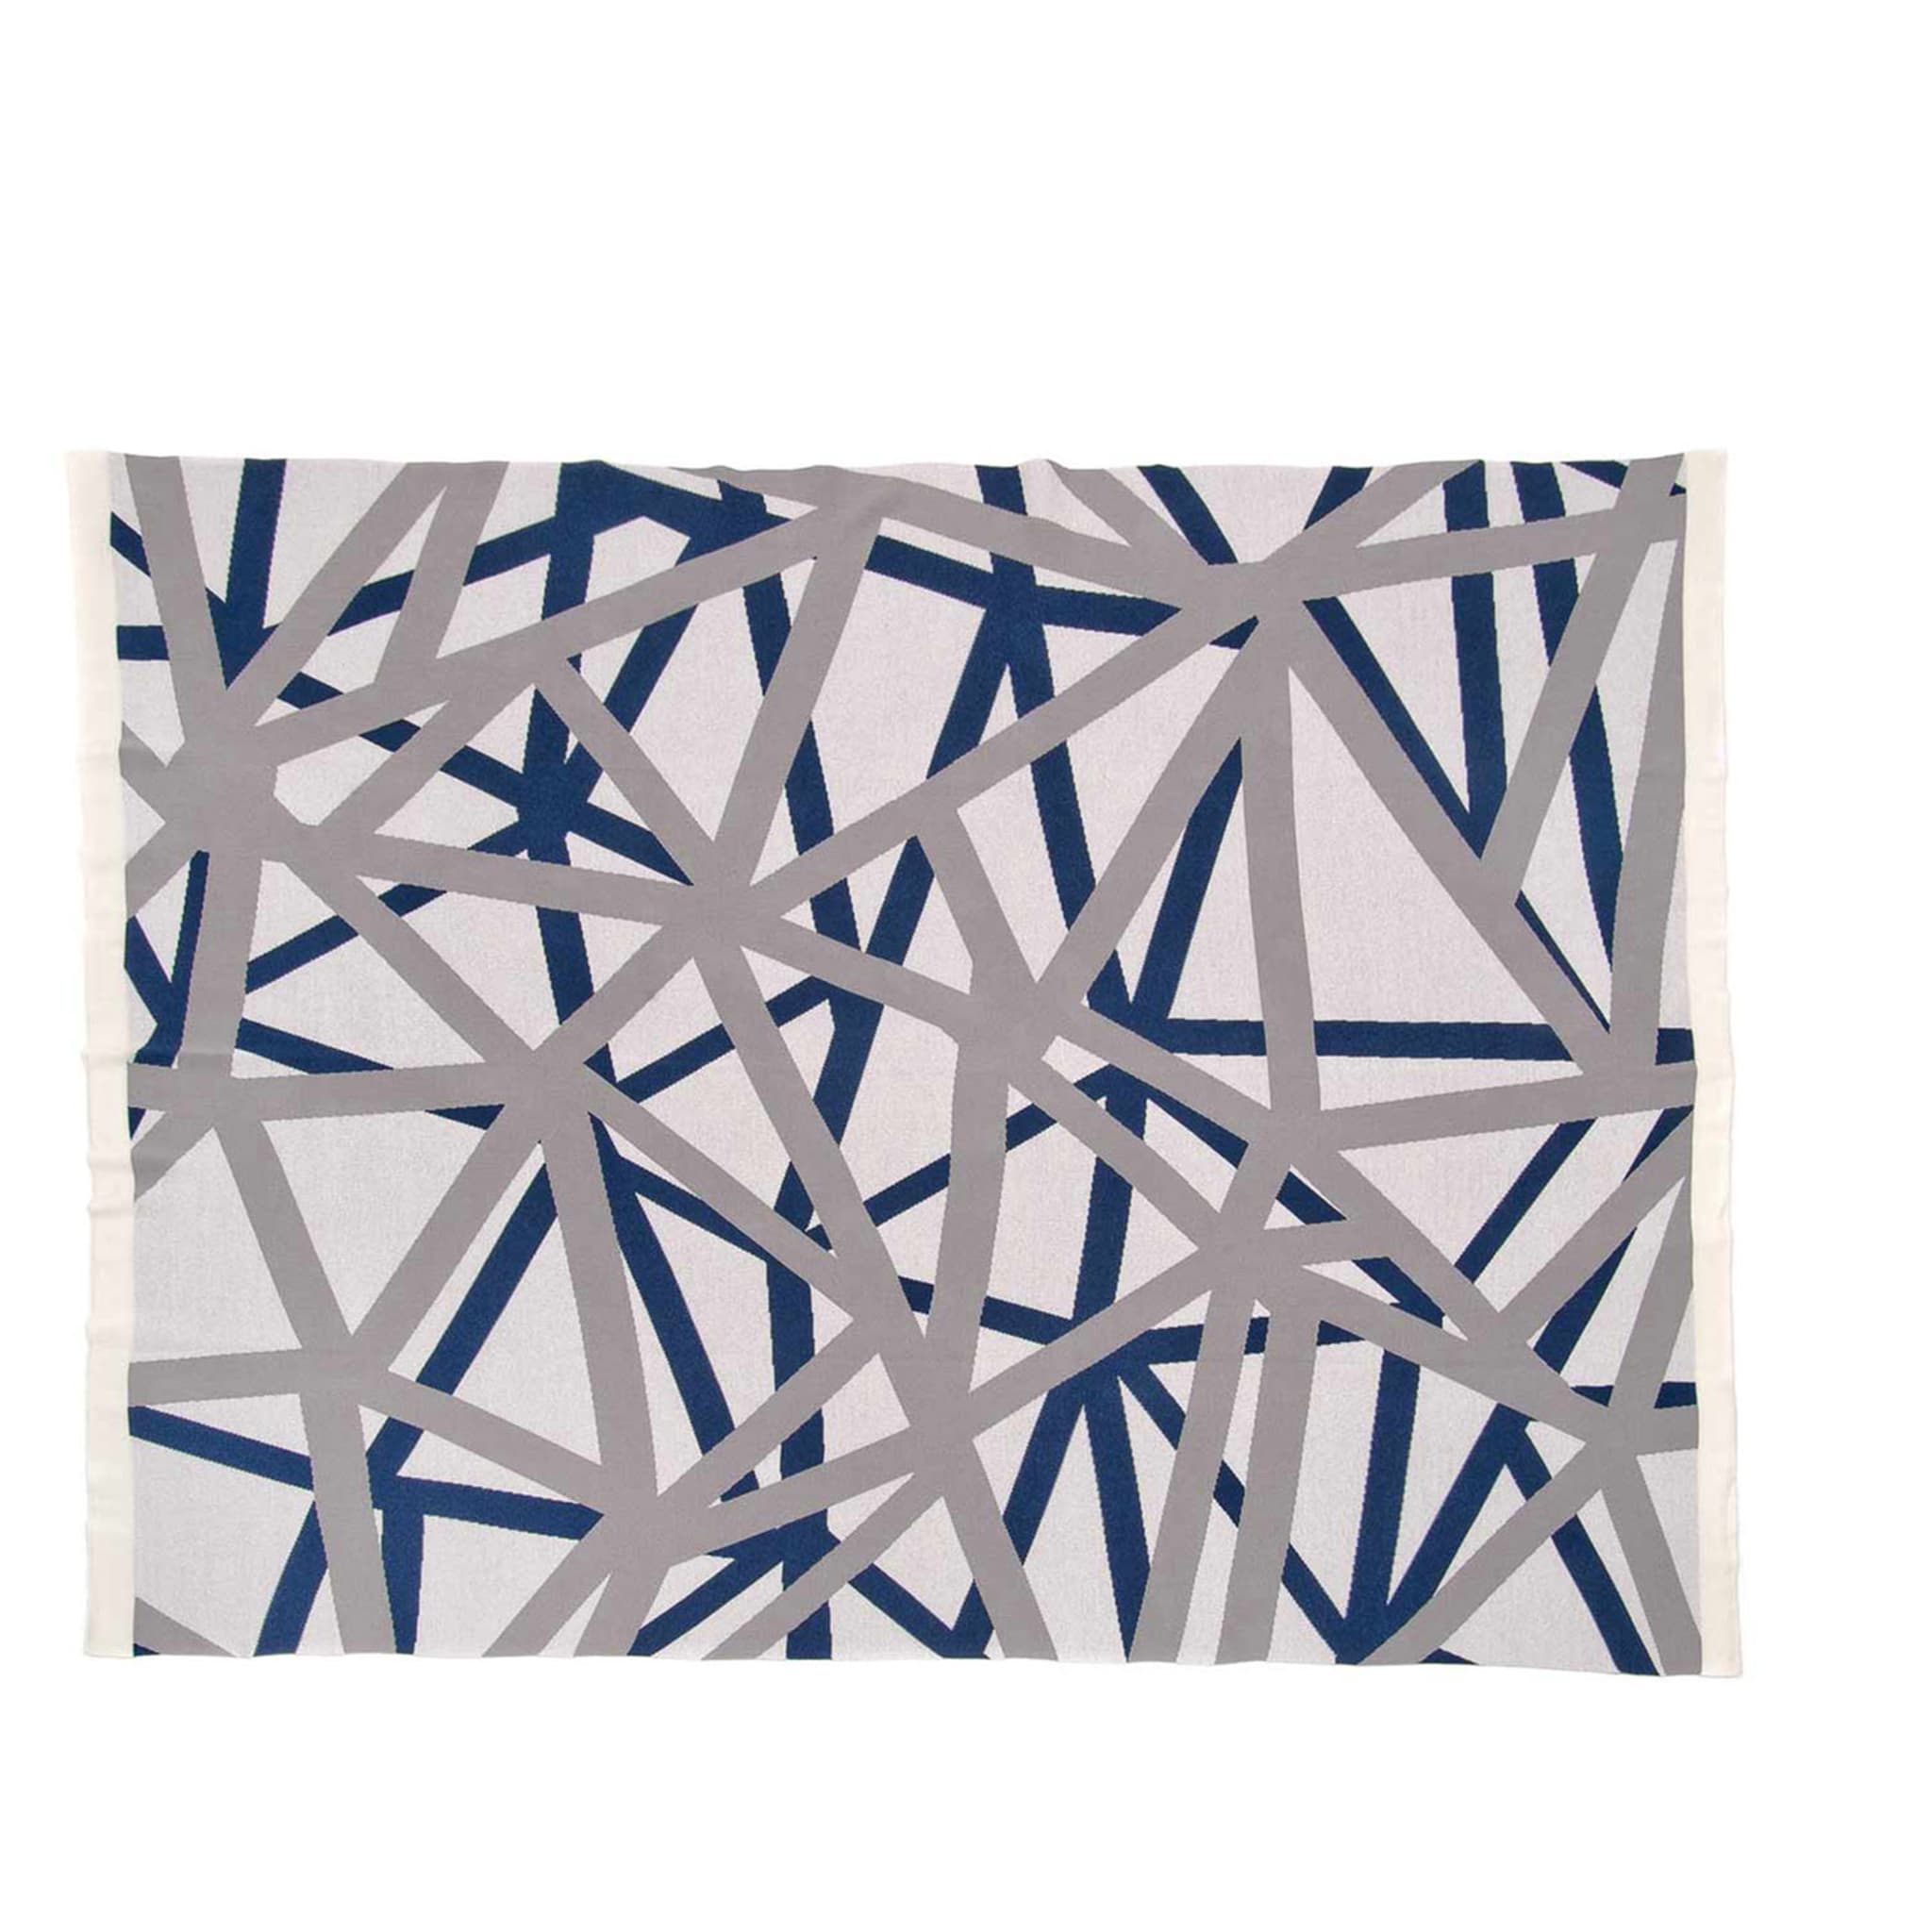 Coperta Cobweb bianco/grigio/blu - Vista principale